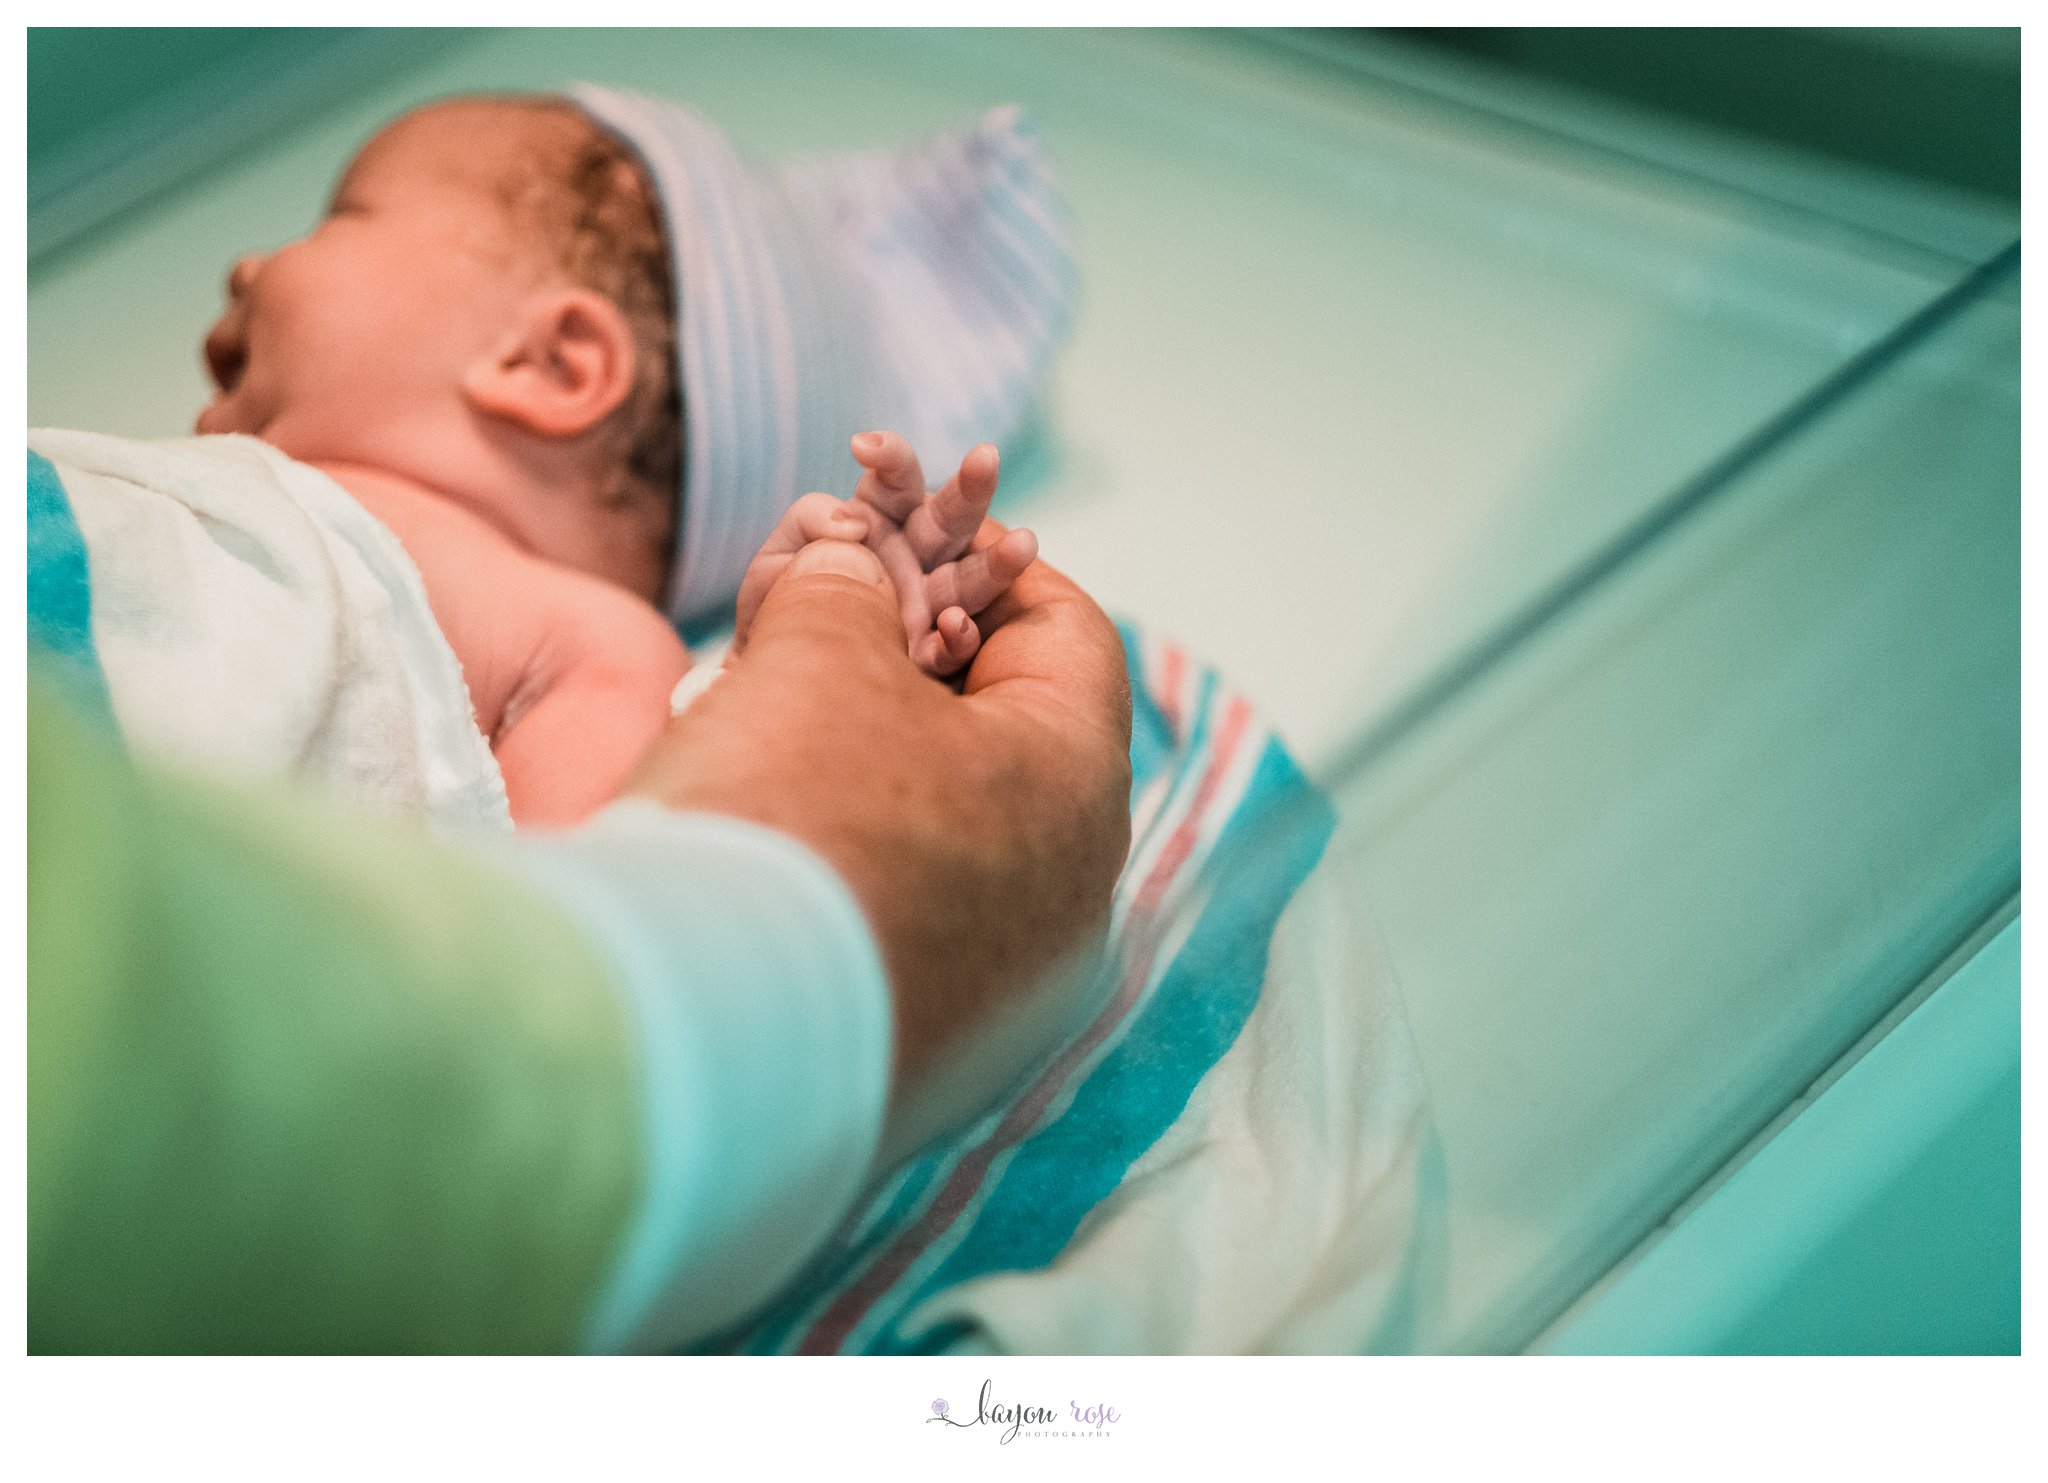 birth,c-section,woman's hospita,